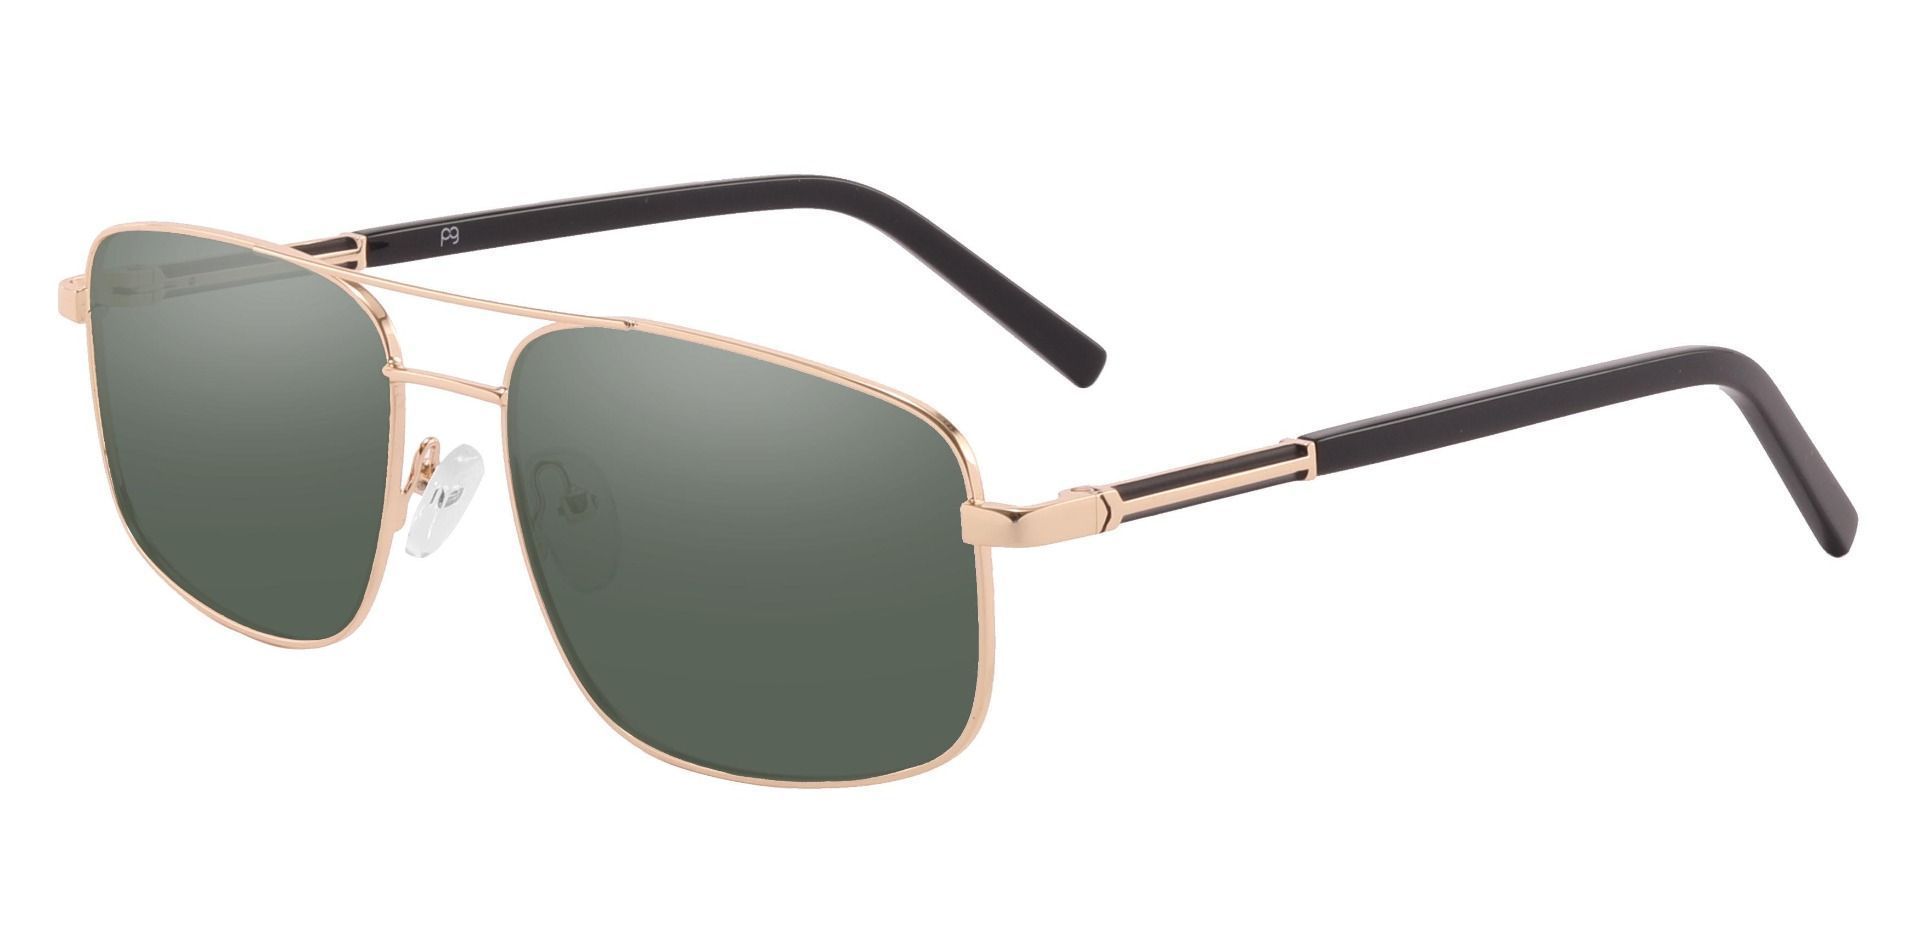 Davenport Aviator Lined Bifocal Sunglasses - Gold Frame With Green Lenses